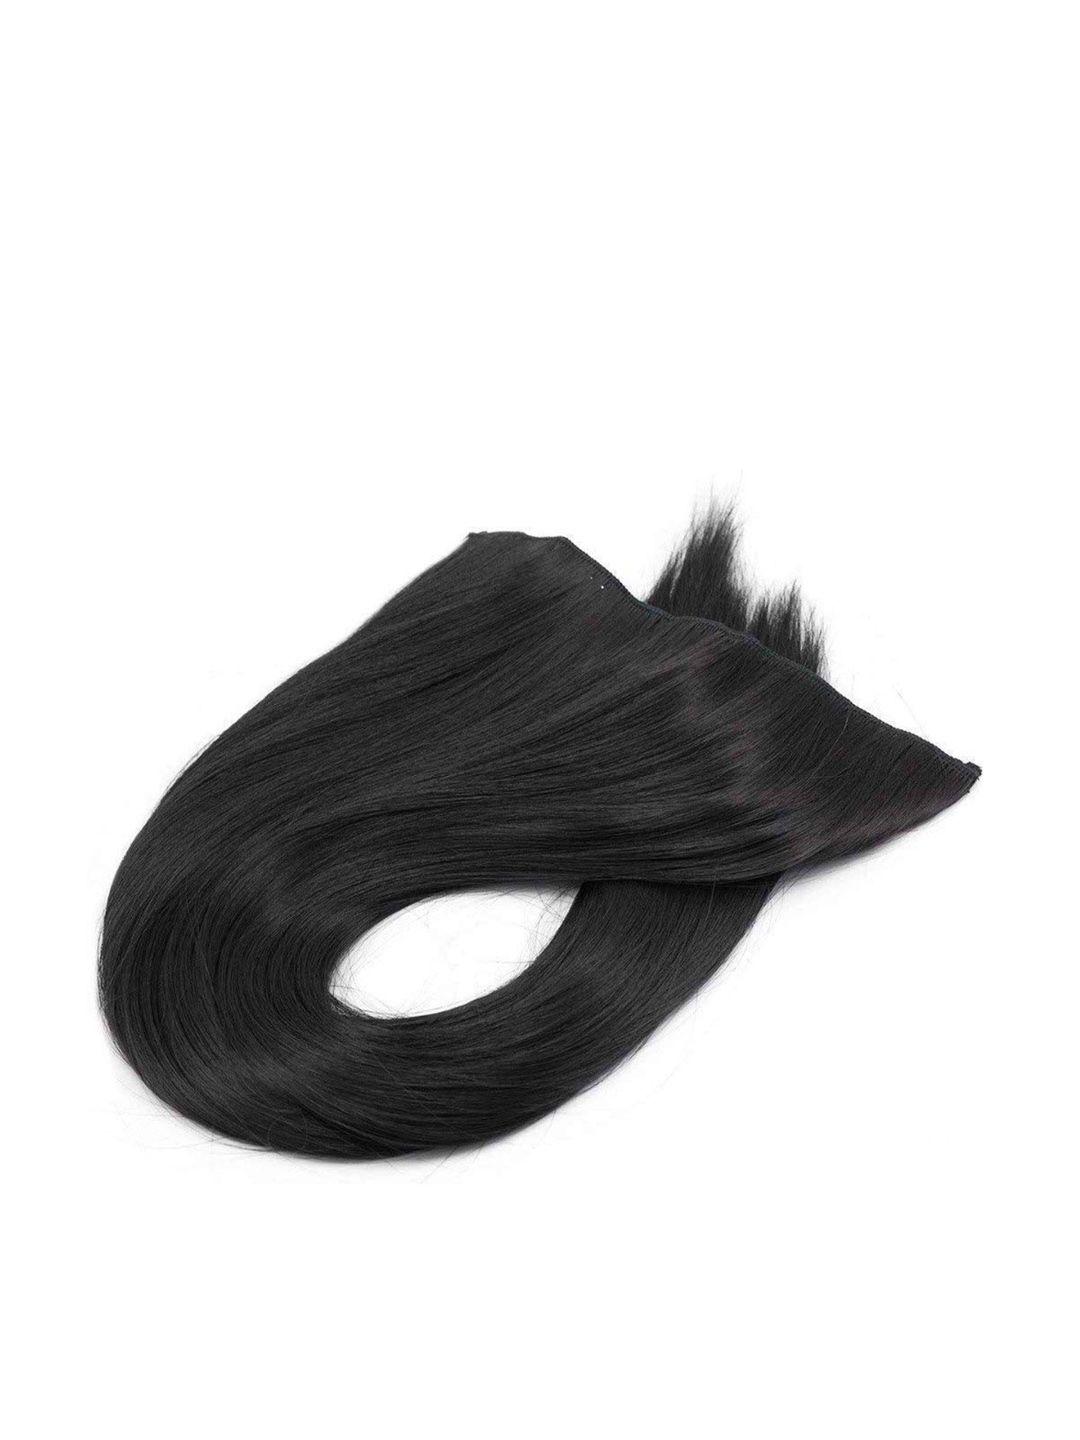 chanderkash 5 clips based 24 inch straight/wavy full head hair extension - black